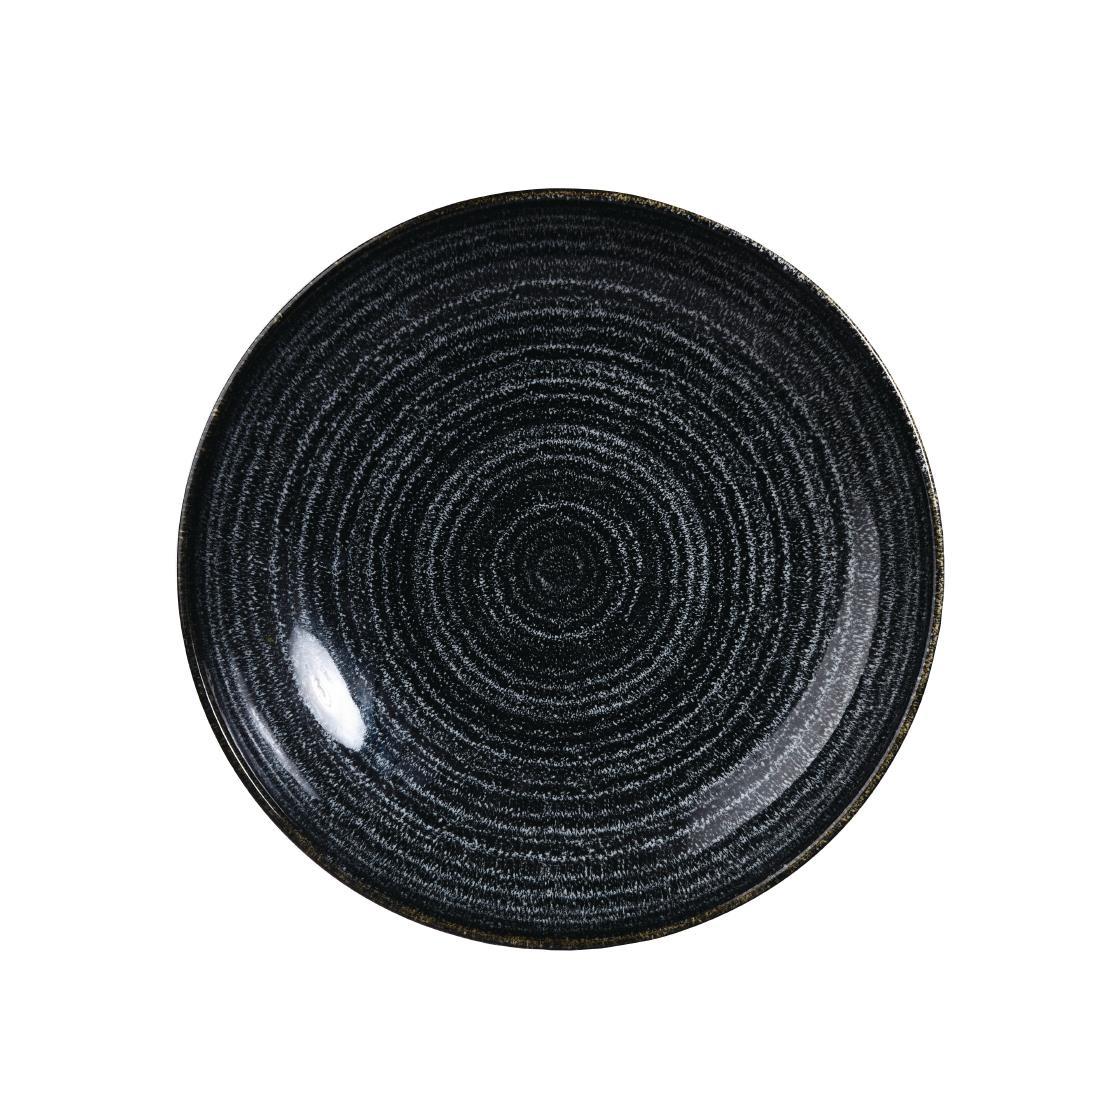 Churchill Studio Prints Homespun Charcoal Black Coupe Bowl 182mm - DA265  - 1